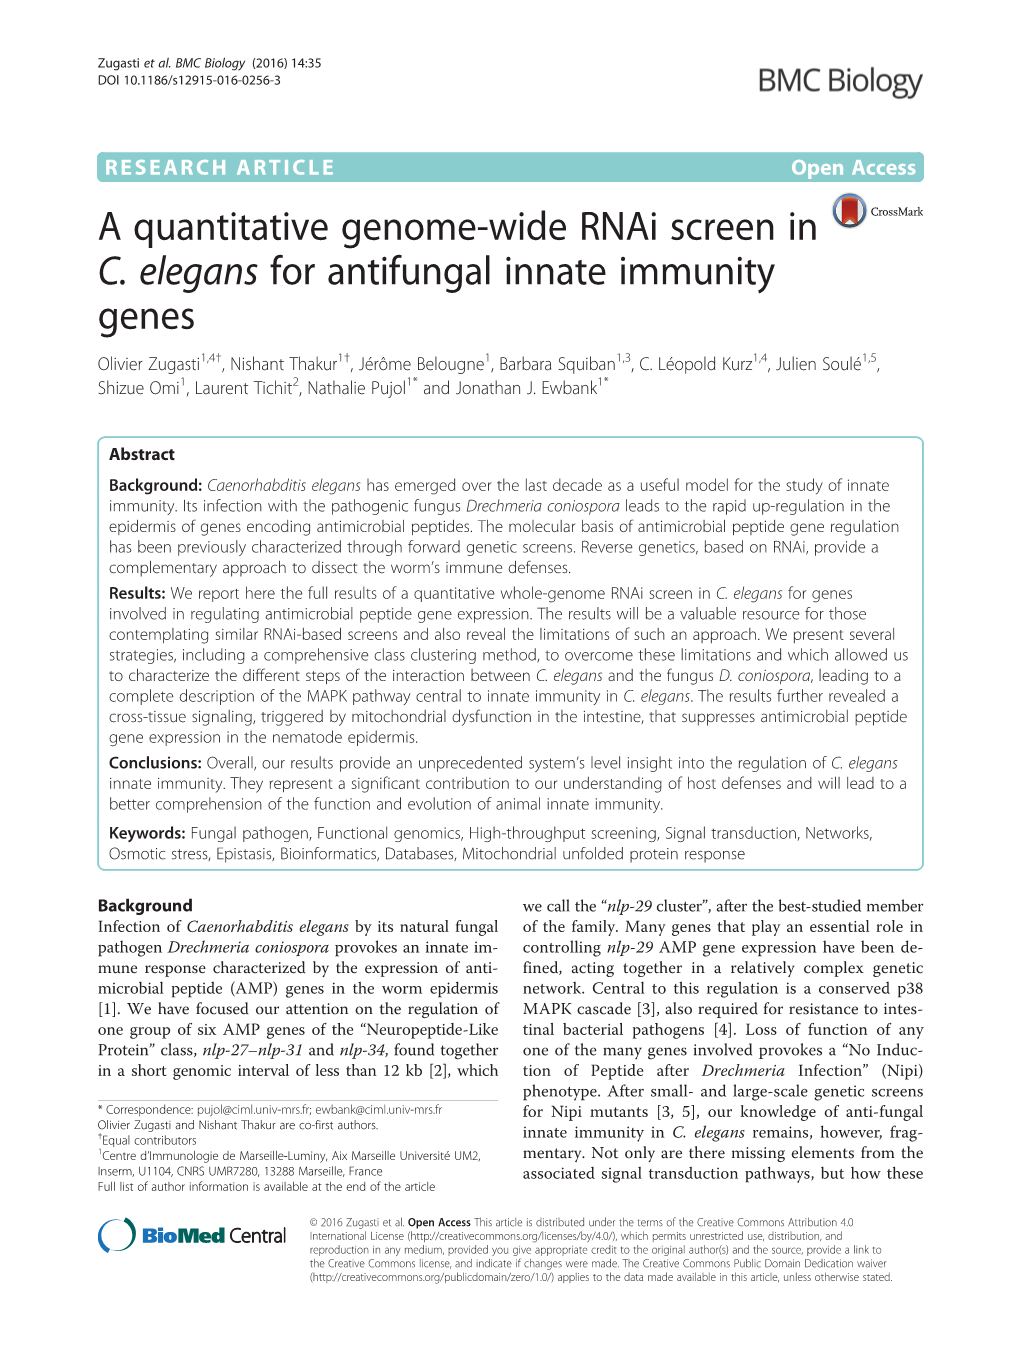 A Quantitative Genome-Wide Rnai Screen in C. Elegans for Antifungal